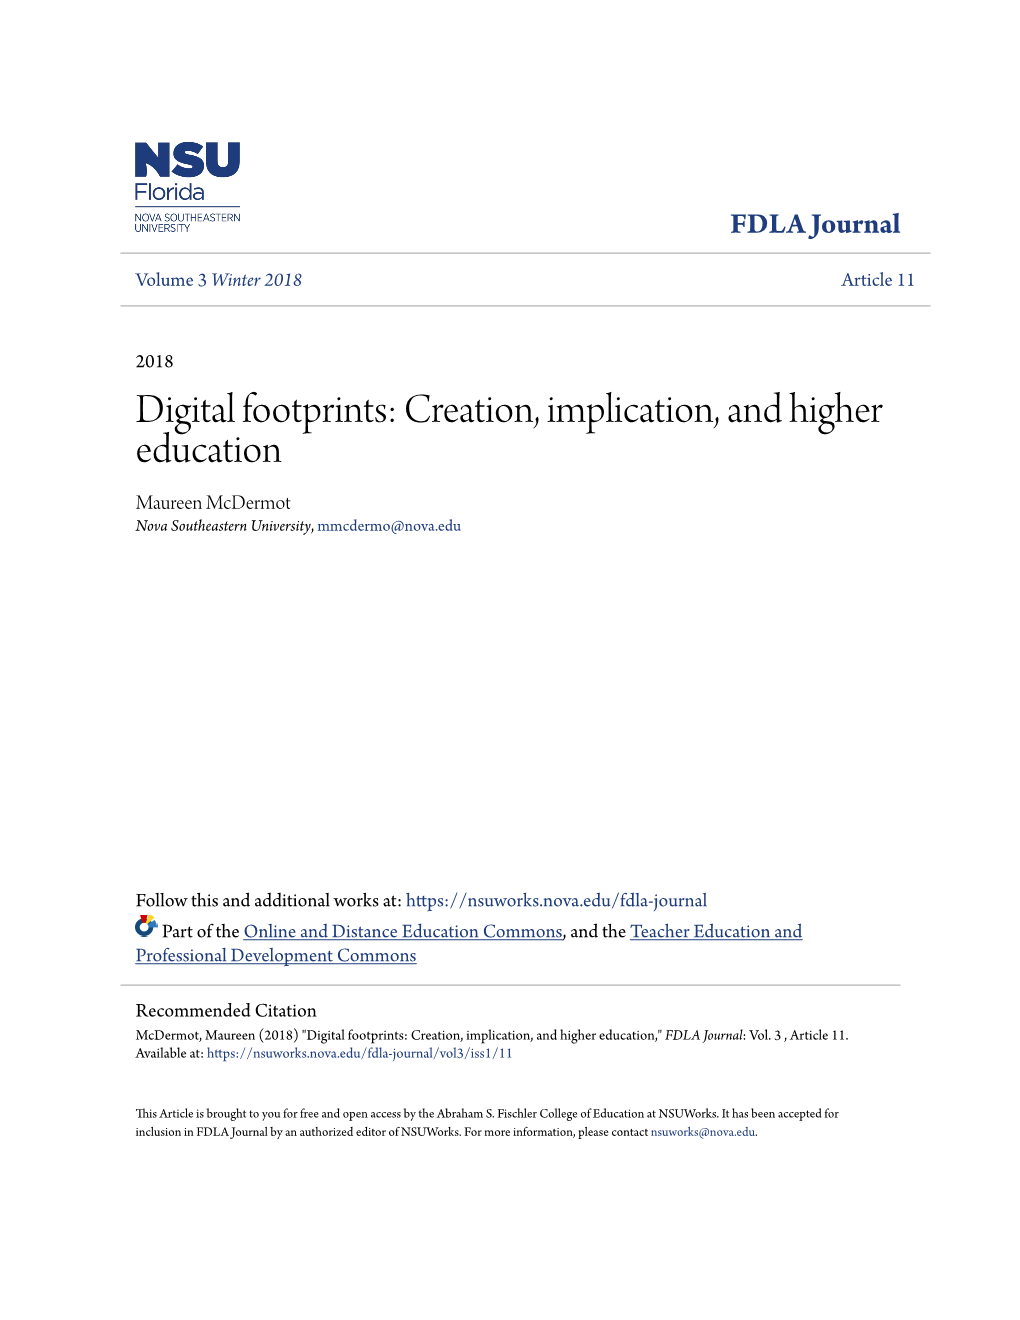 Digital Footprints: Creation, Implication, and Higher Education Maureen Mcdermot Nova Southeastern University, Mmcdermo@Nova.Edu